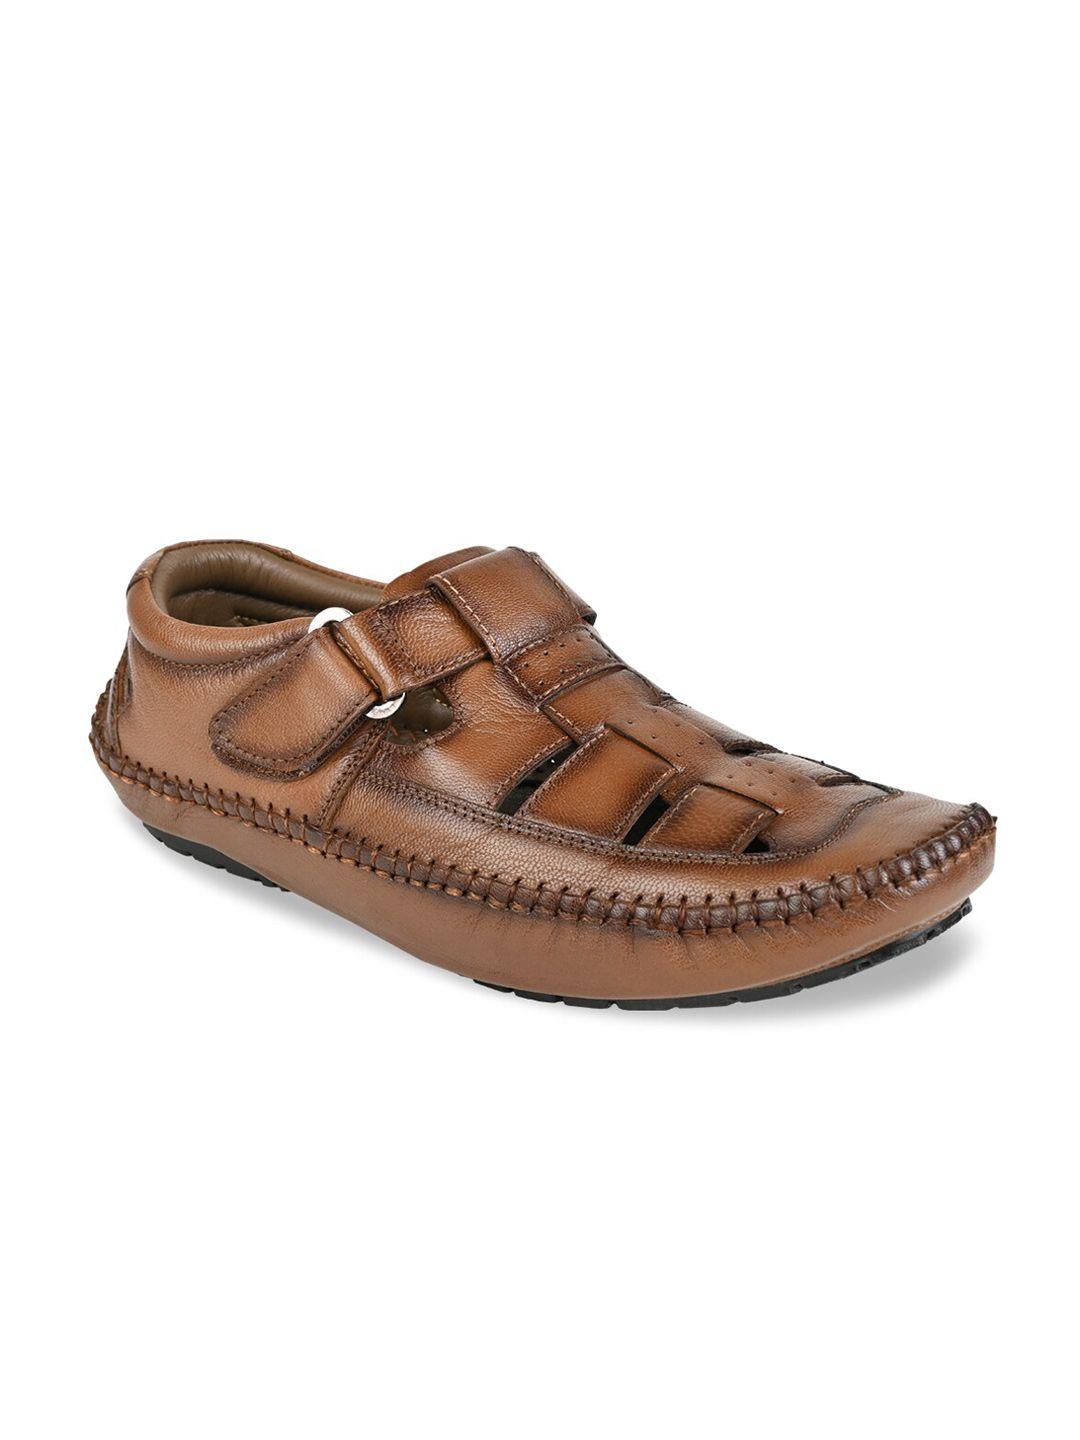 regal-men-brown-leather-fisherman-sandals